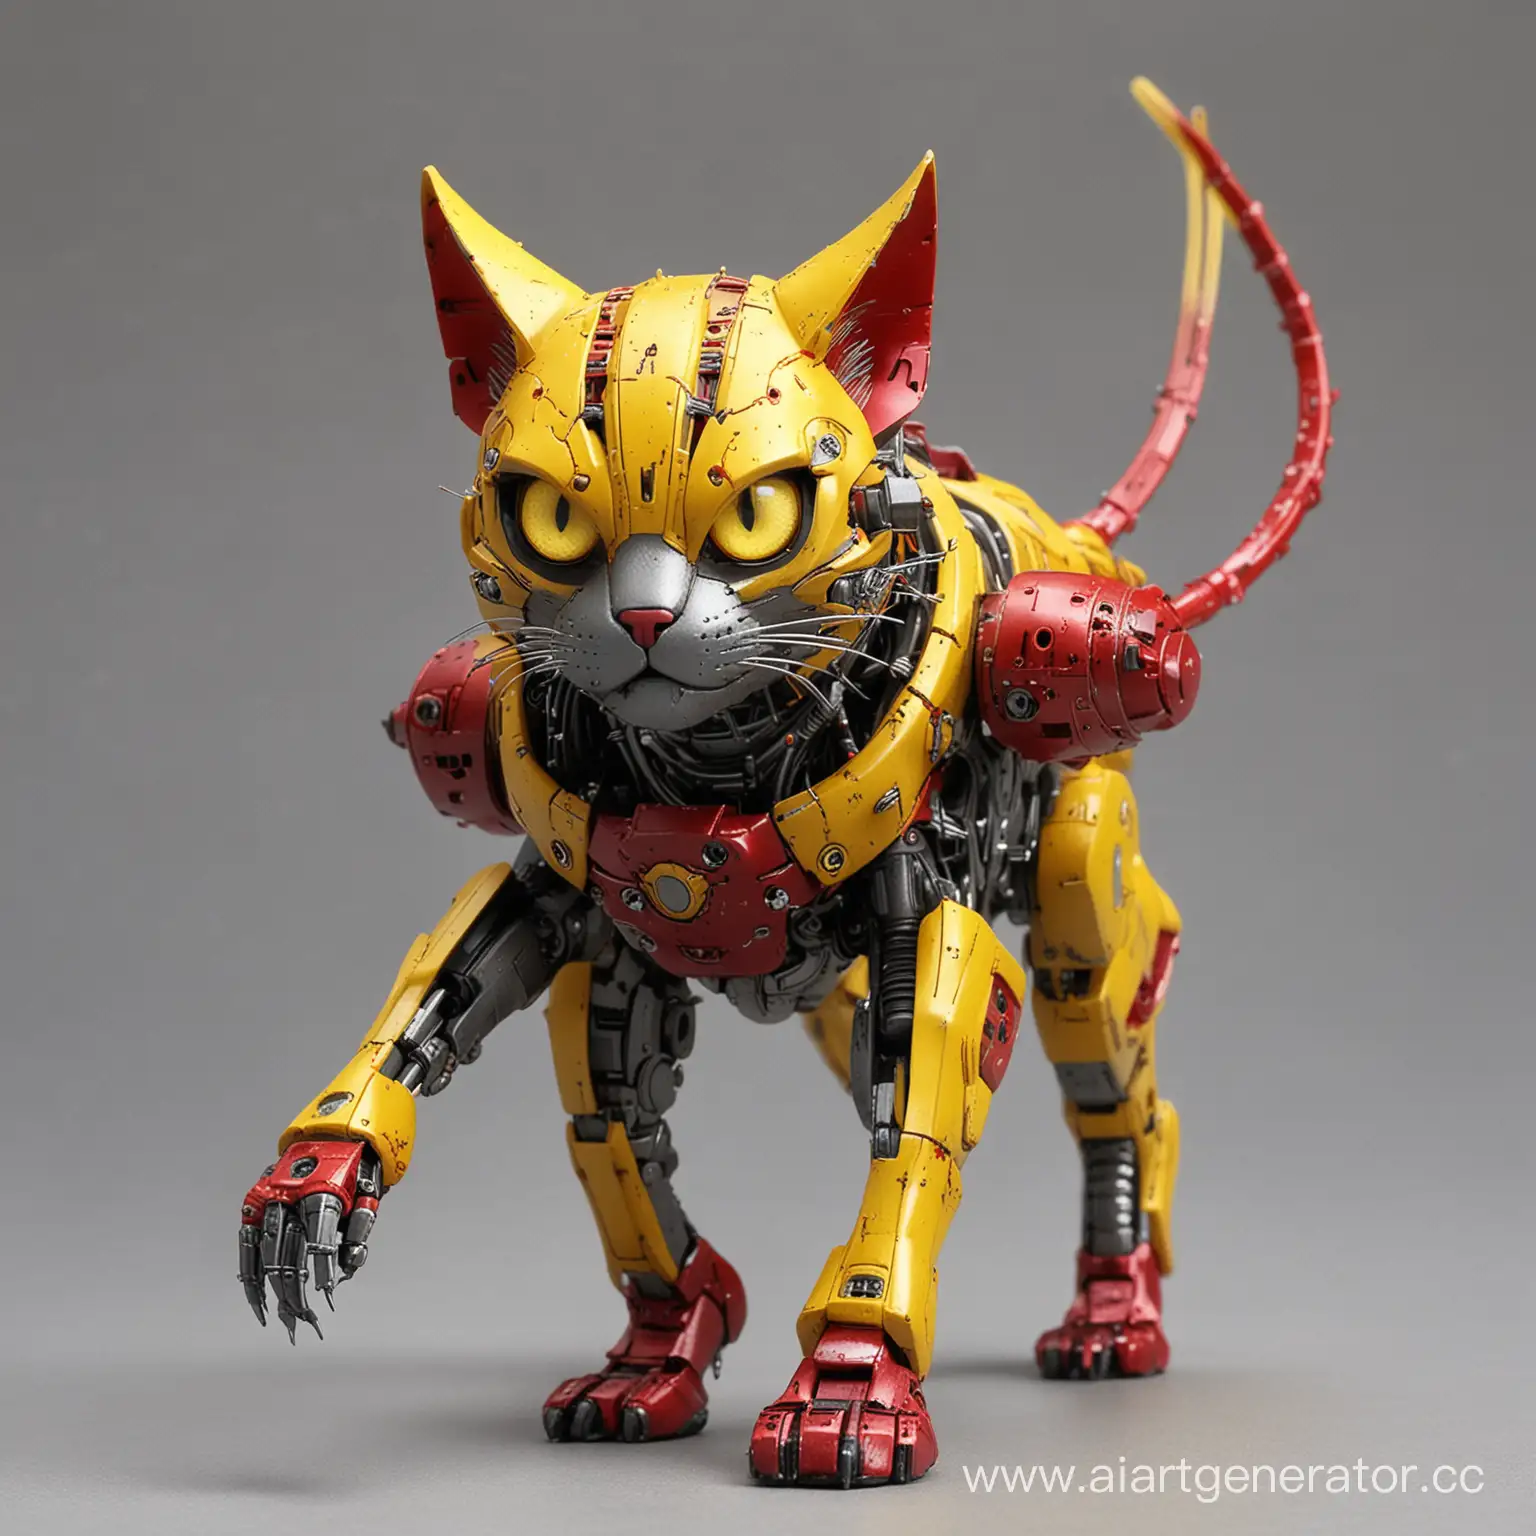 Futuristic-Feline-Warrior-in-NeonLit-Battle-Arena